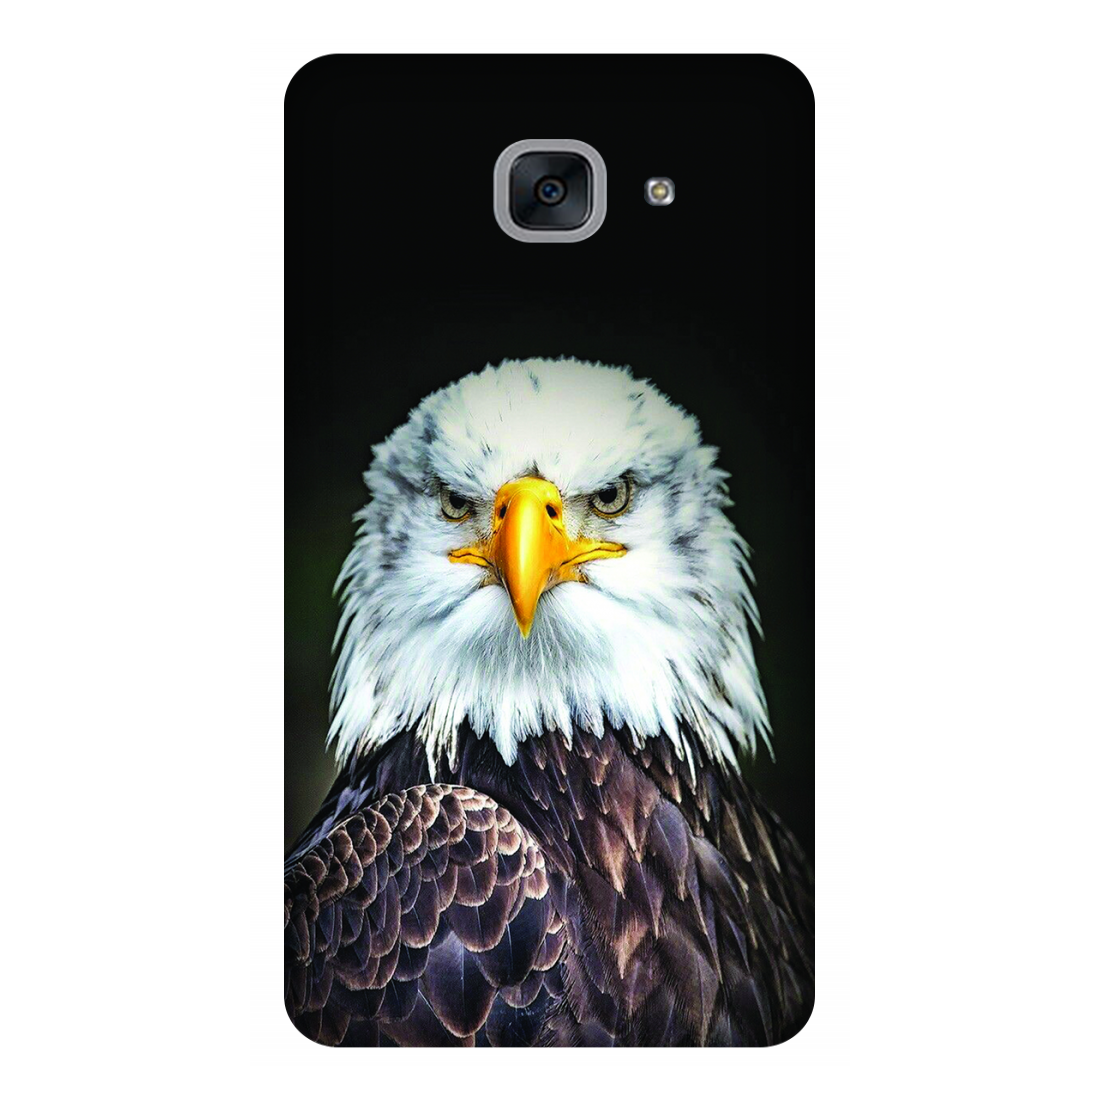 Majestic Bald Eagle Portrait Case Samsung Galaxy J7 Max